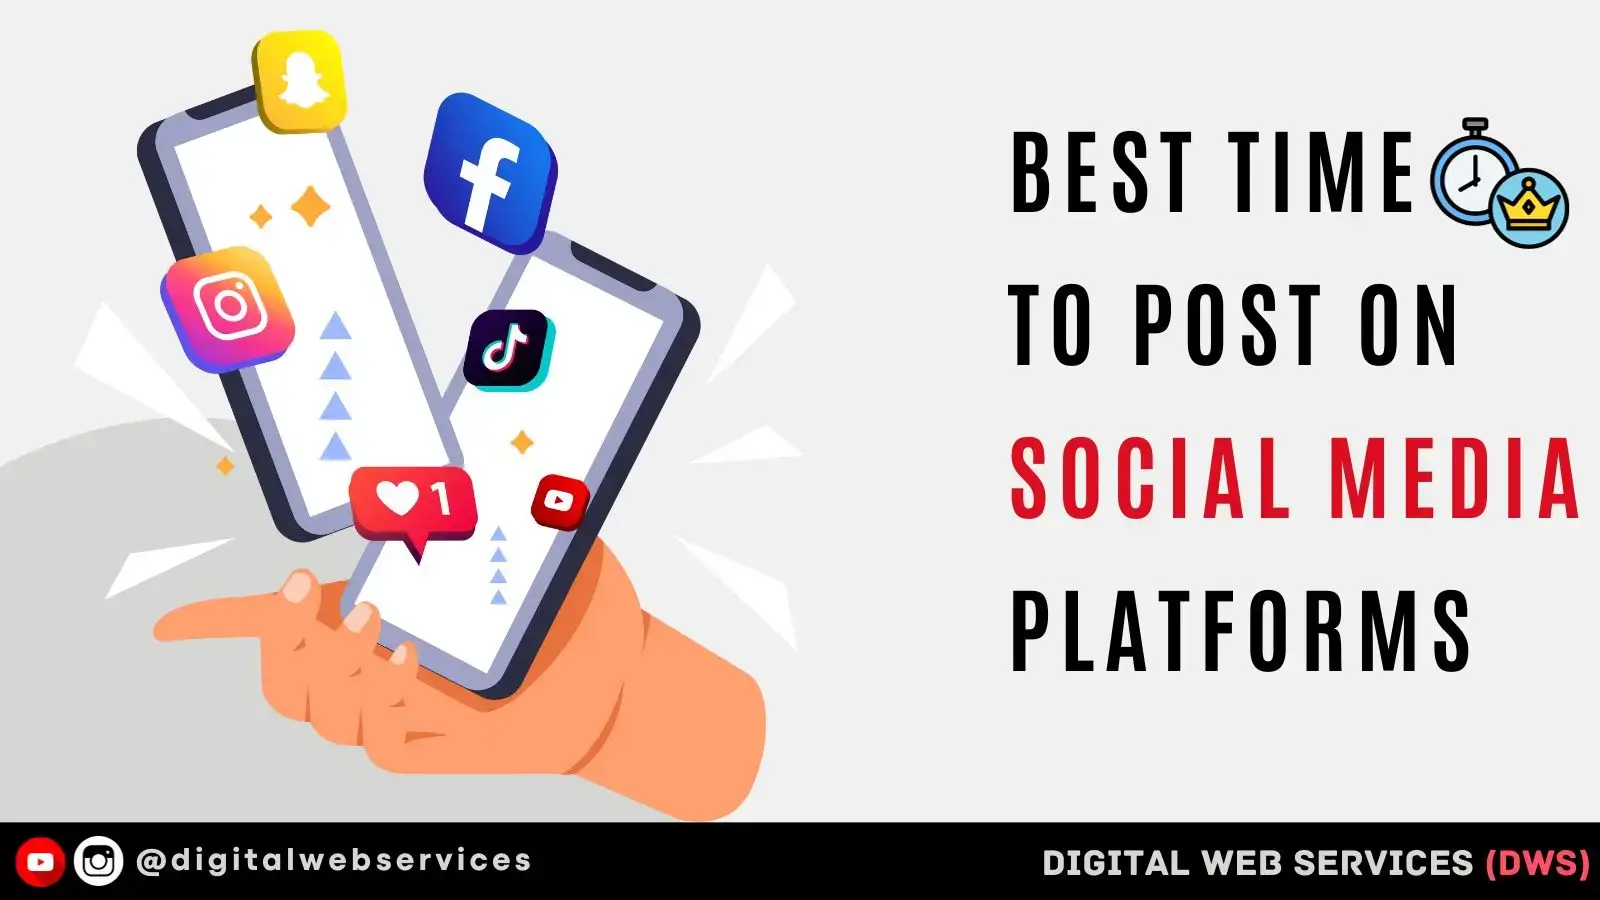 Best Time To Post on Social Media Platforms